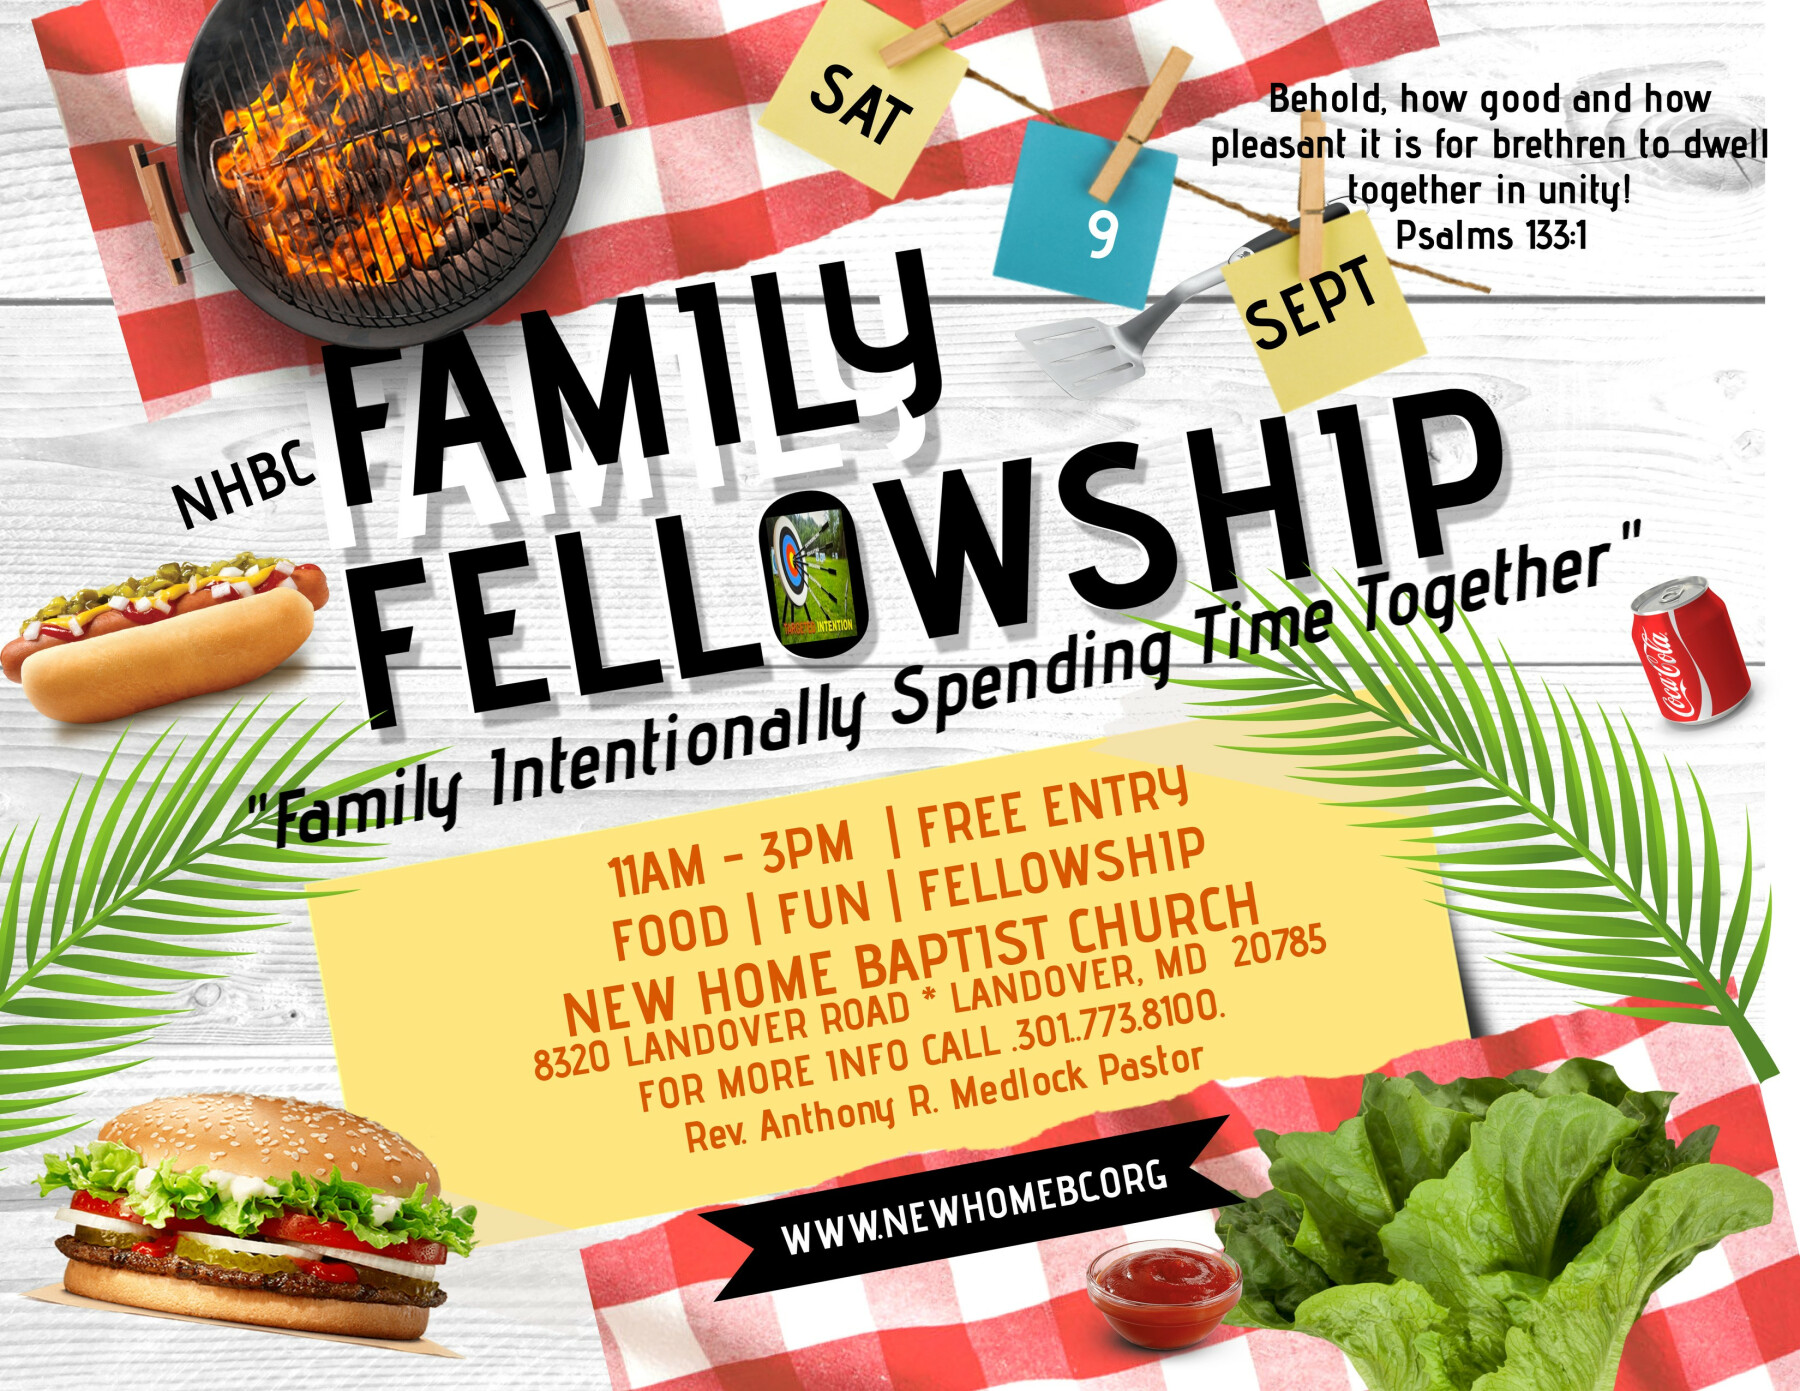 NHBC Family Fellowship (11:00 AM - 3:00 PM)